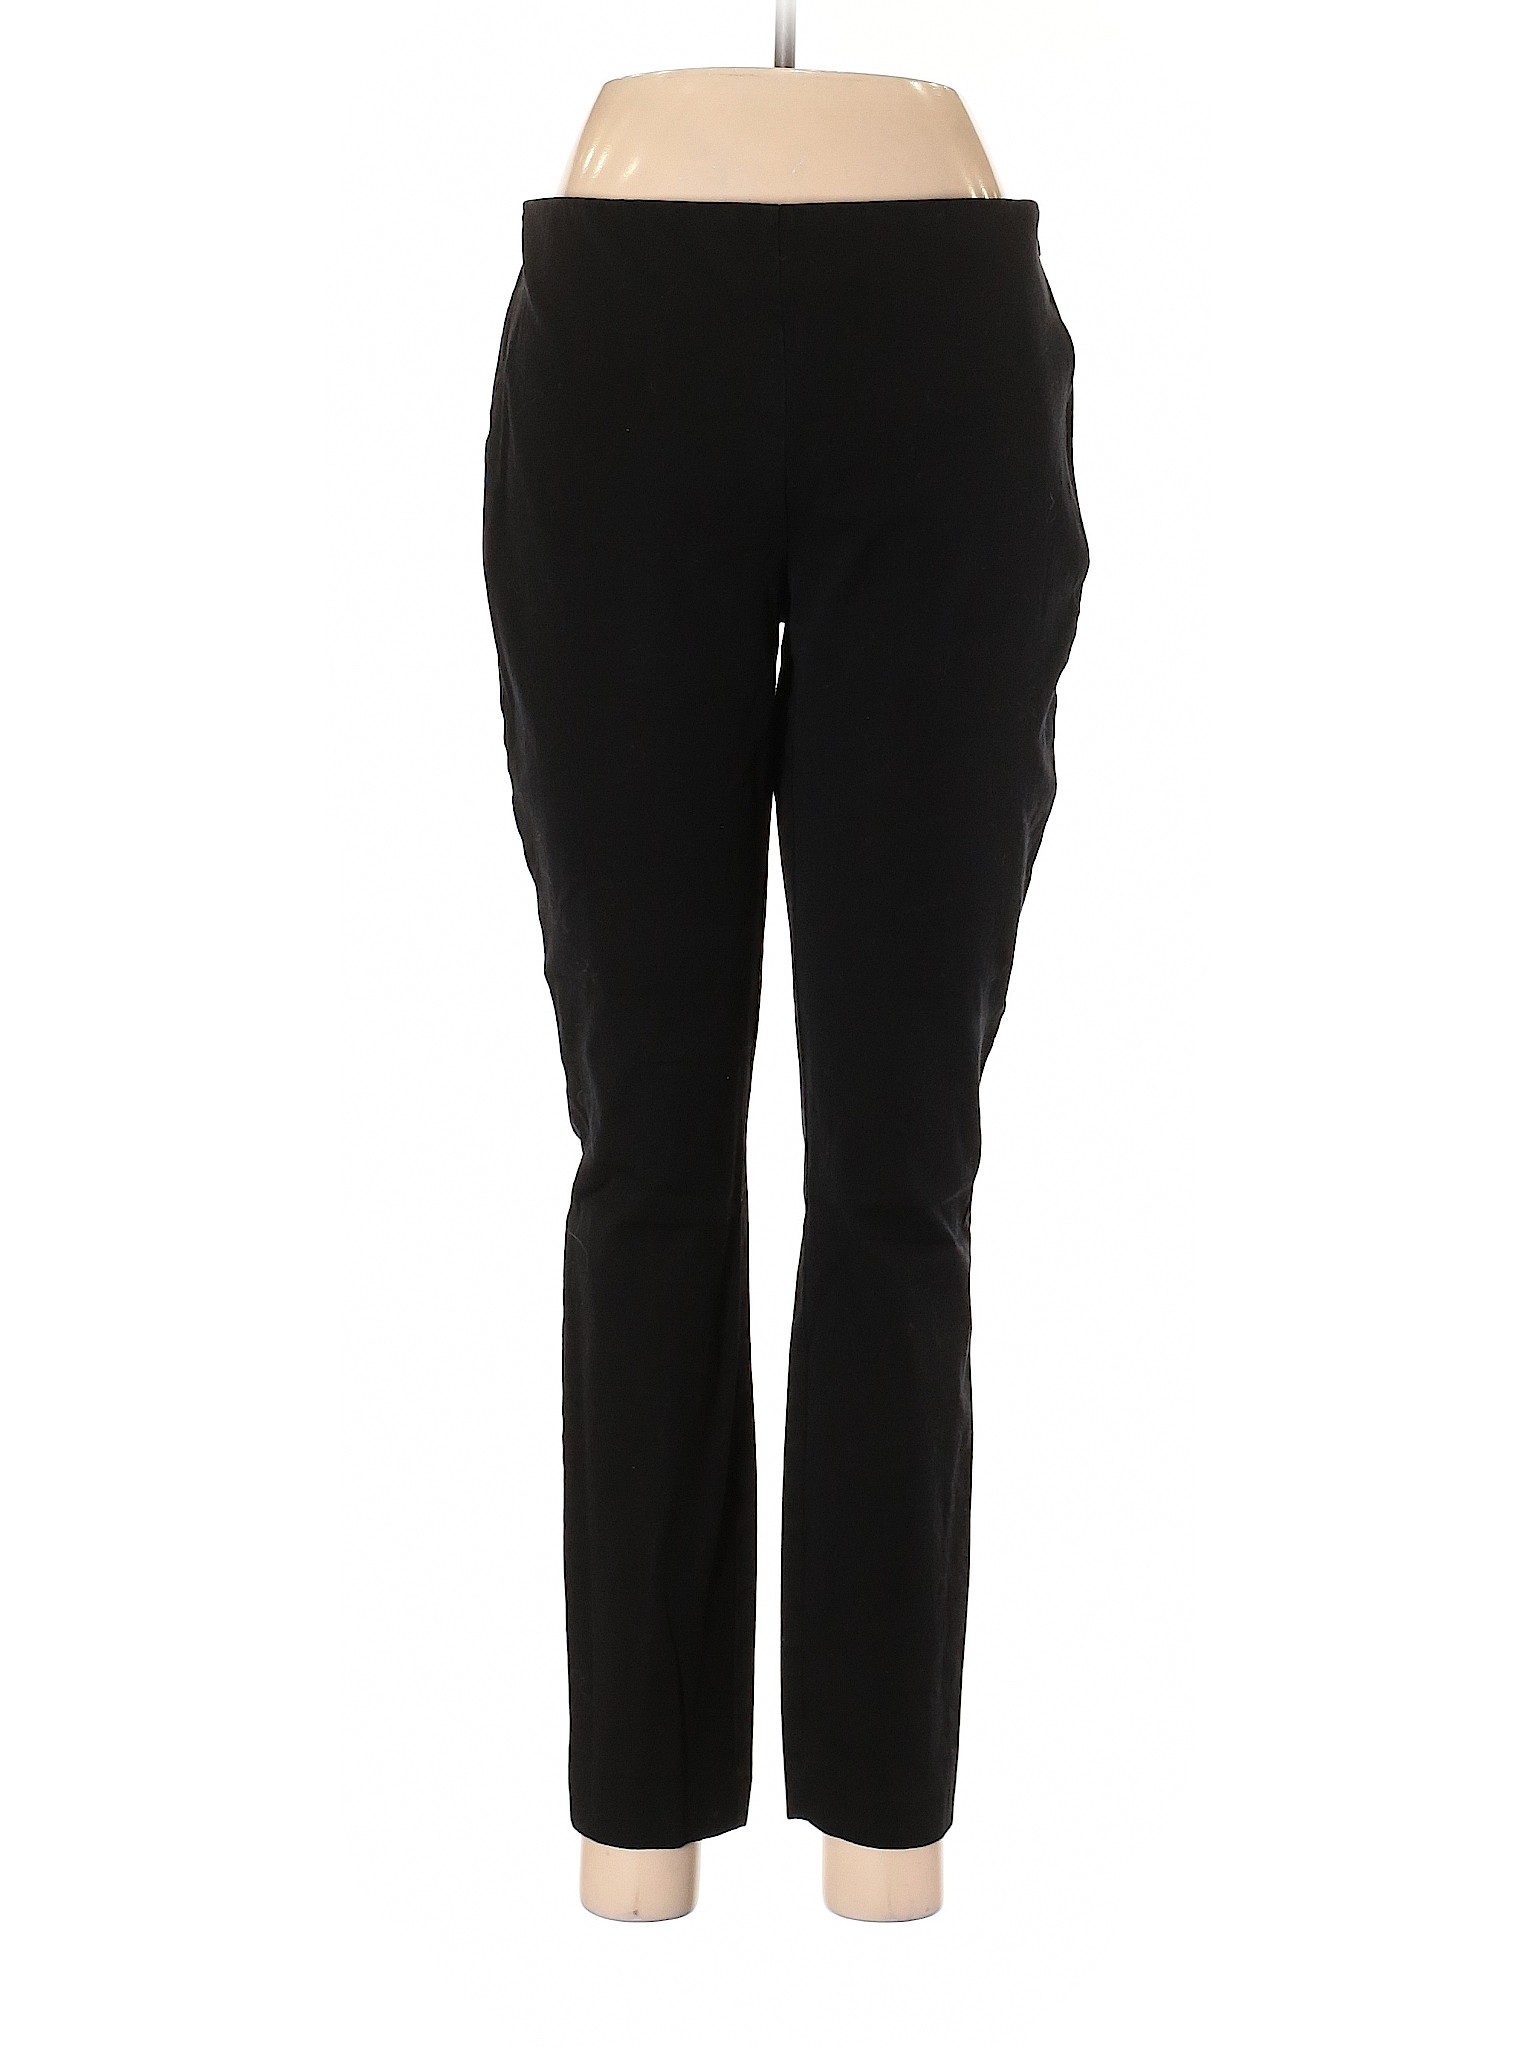 CAbi Women Black Casual Pants 8 | eBay